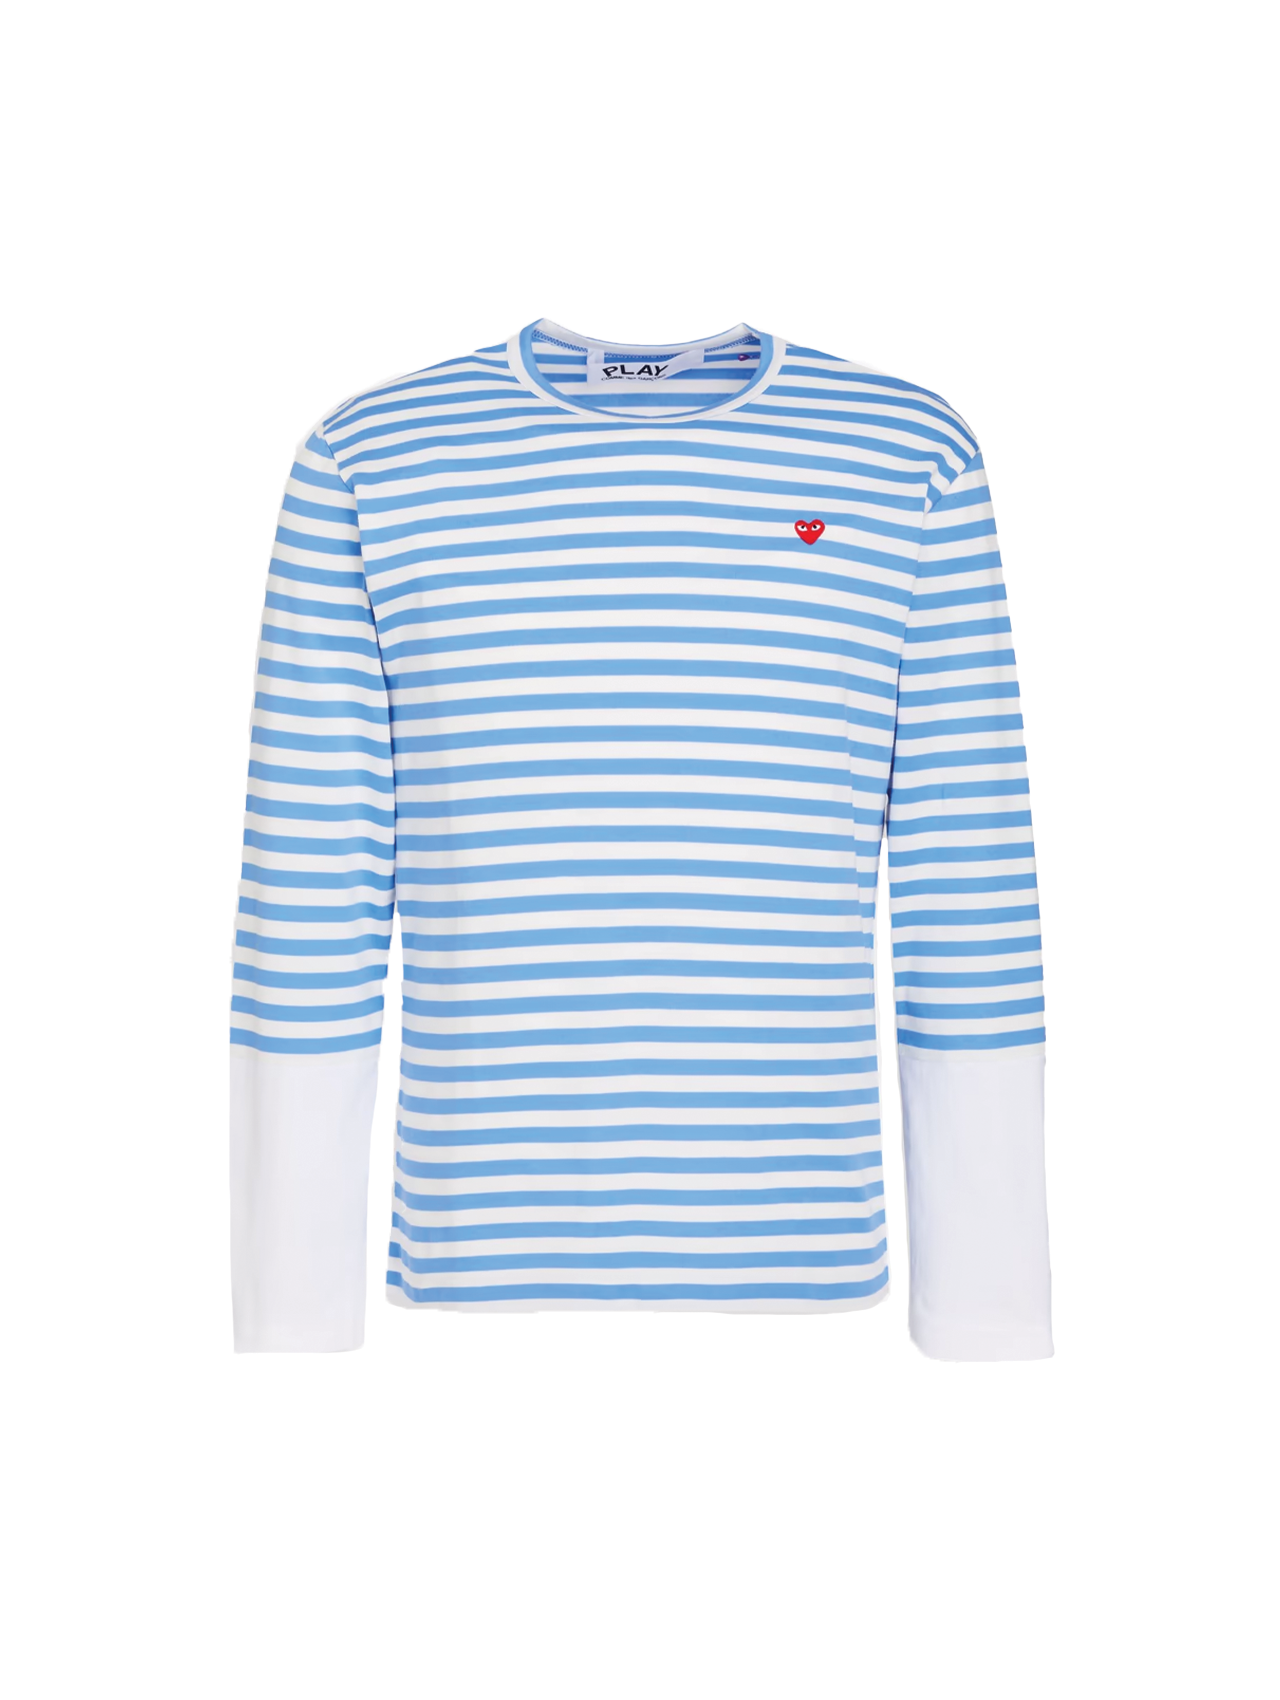 CDG PLAY Light Blue Stripe Logo Patch Long Sleeve Shirt